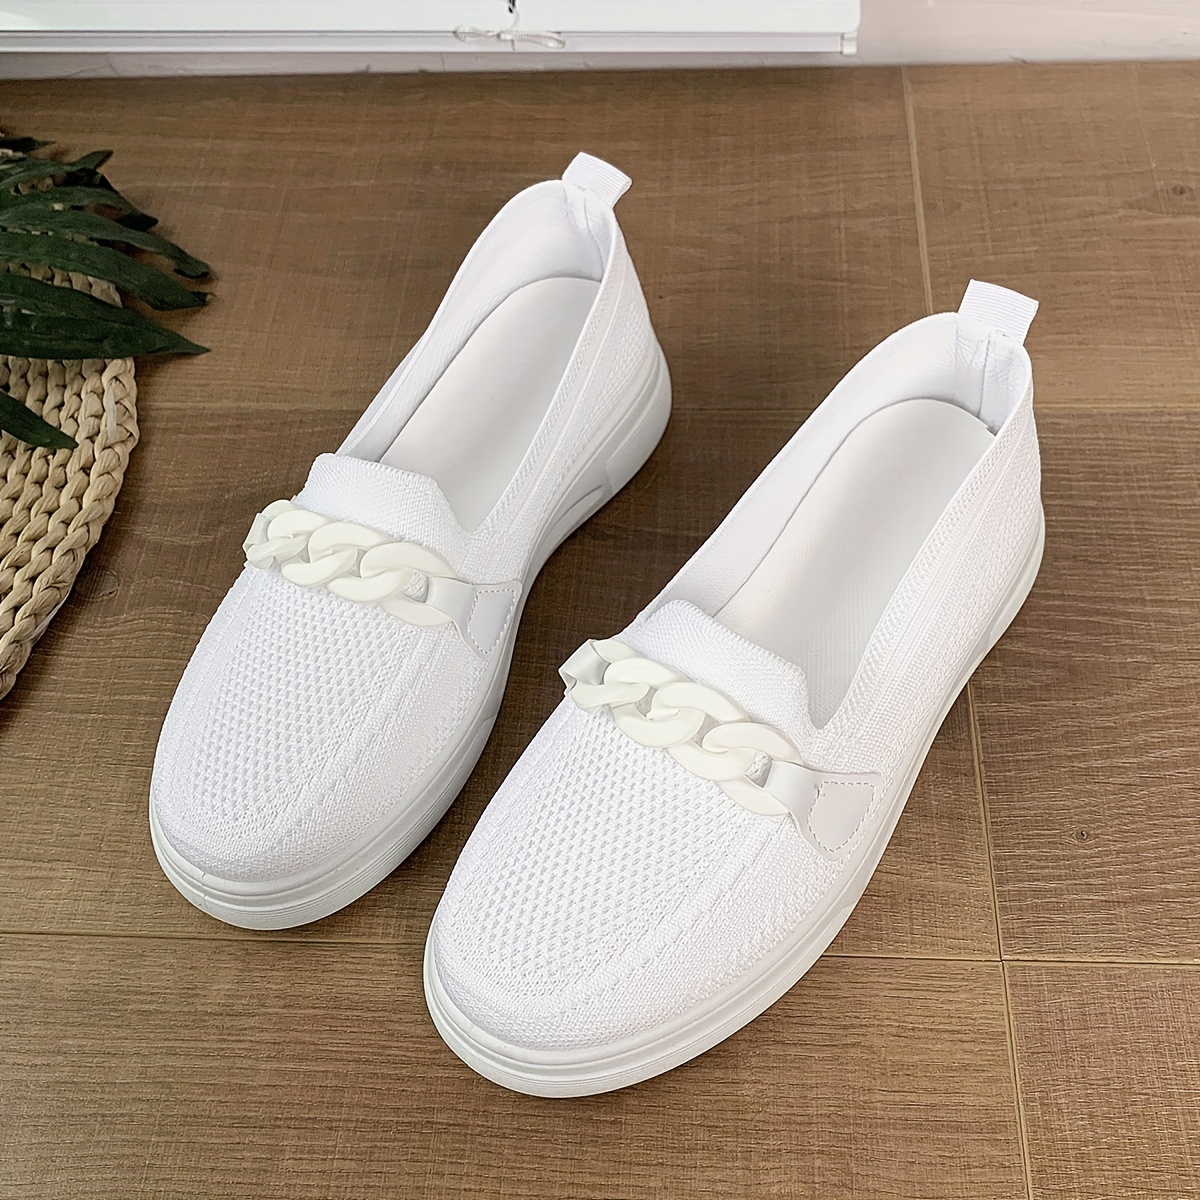 Ladies' Fashionable White Waterproof Slippers With Anti-slip